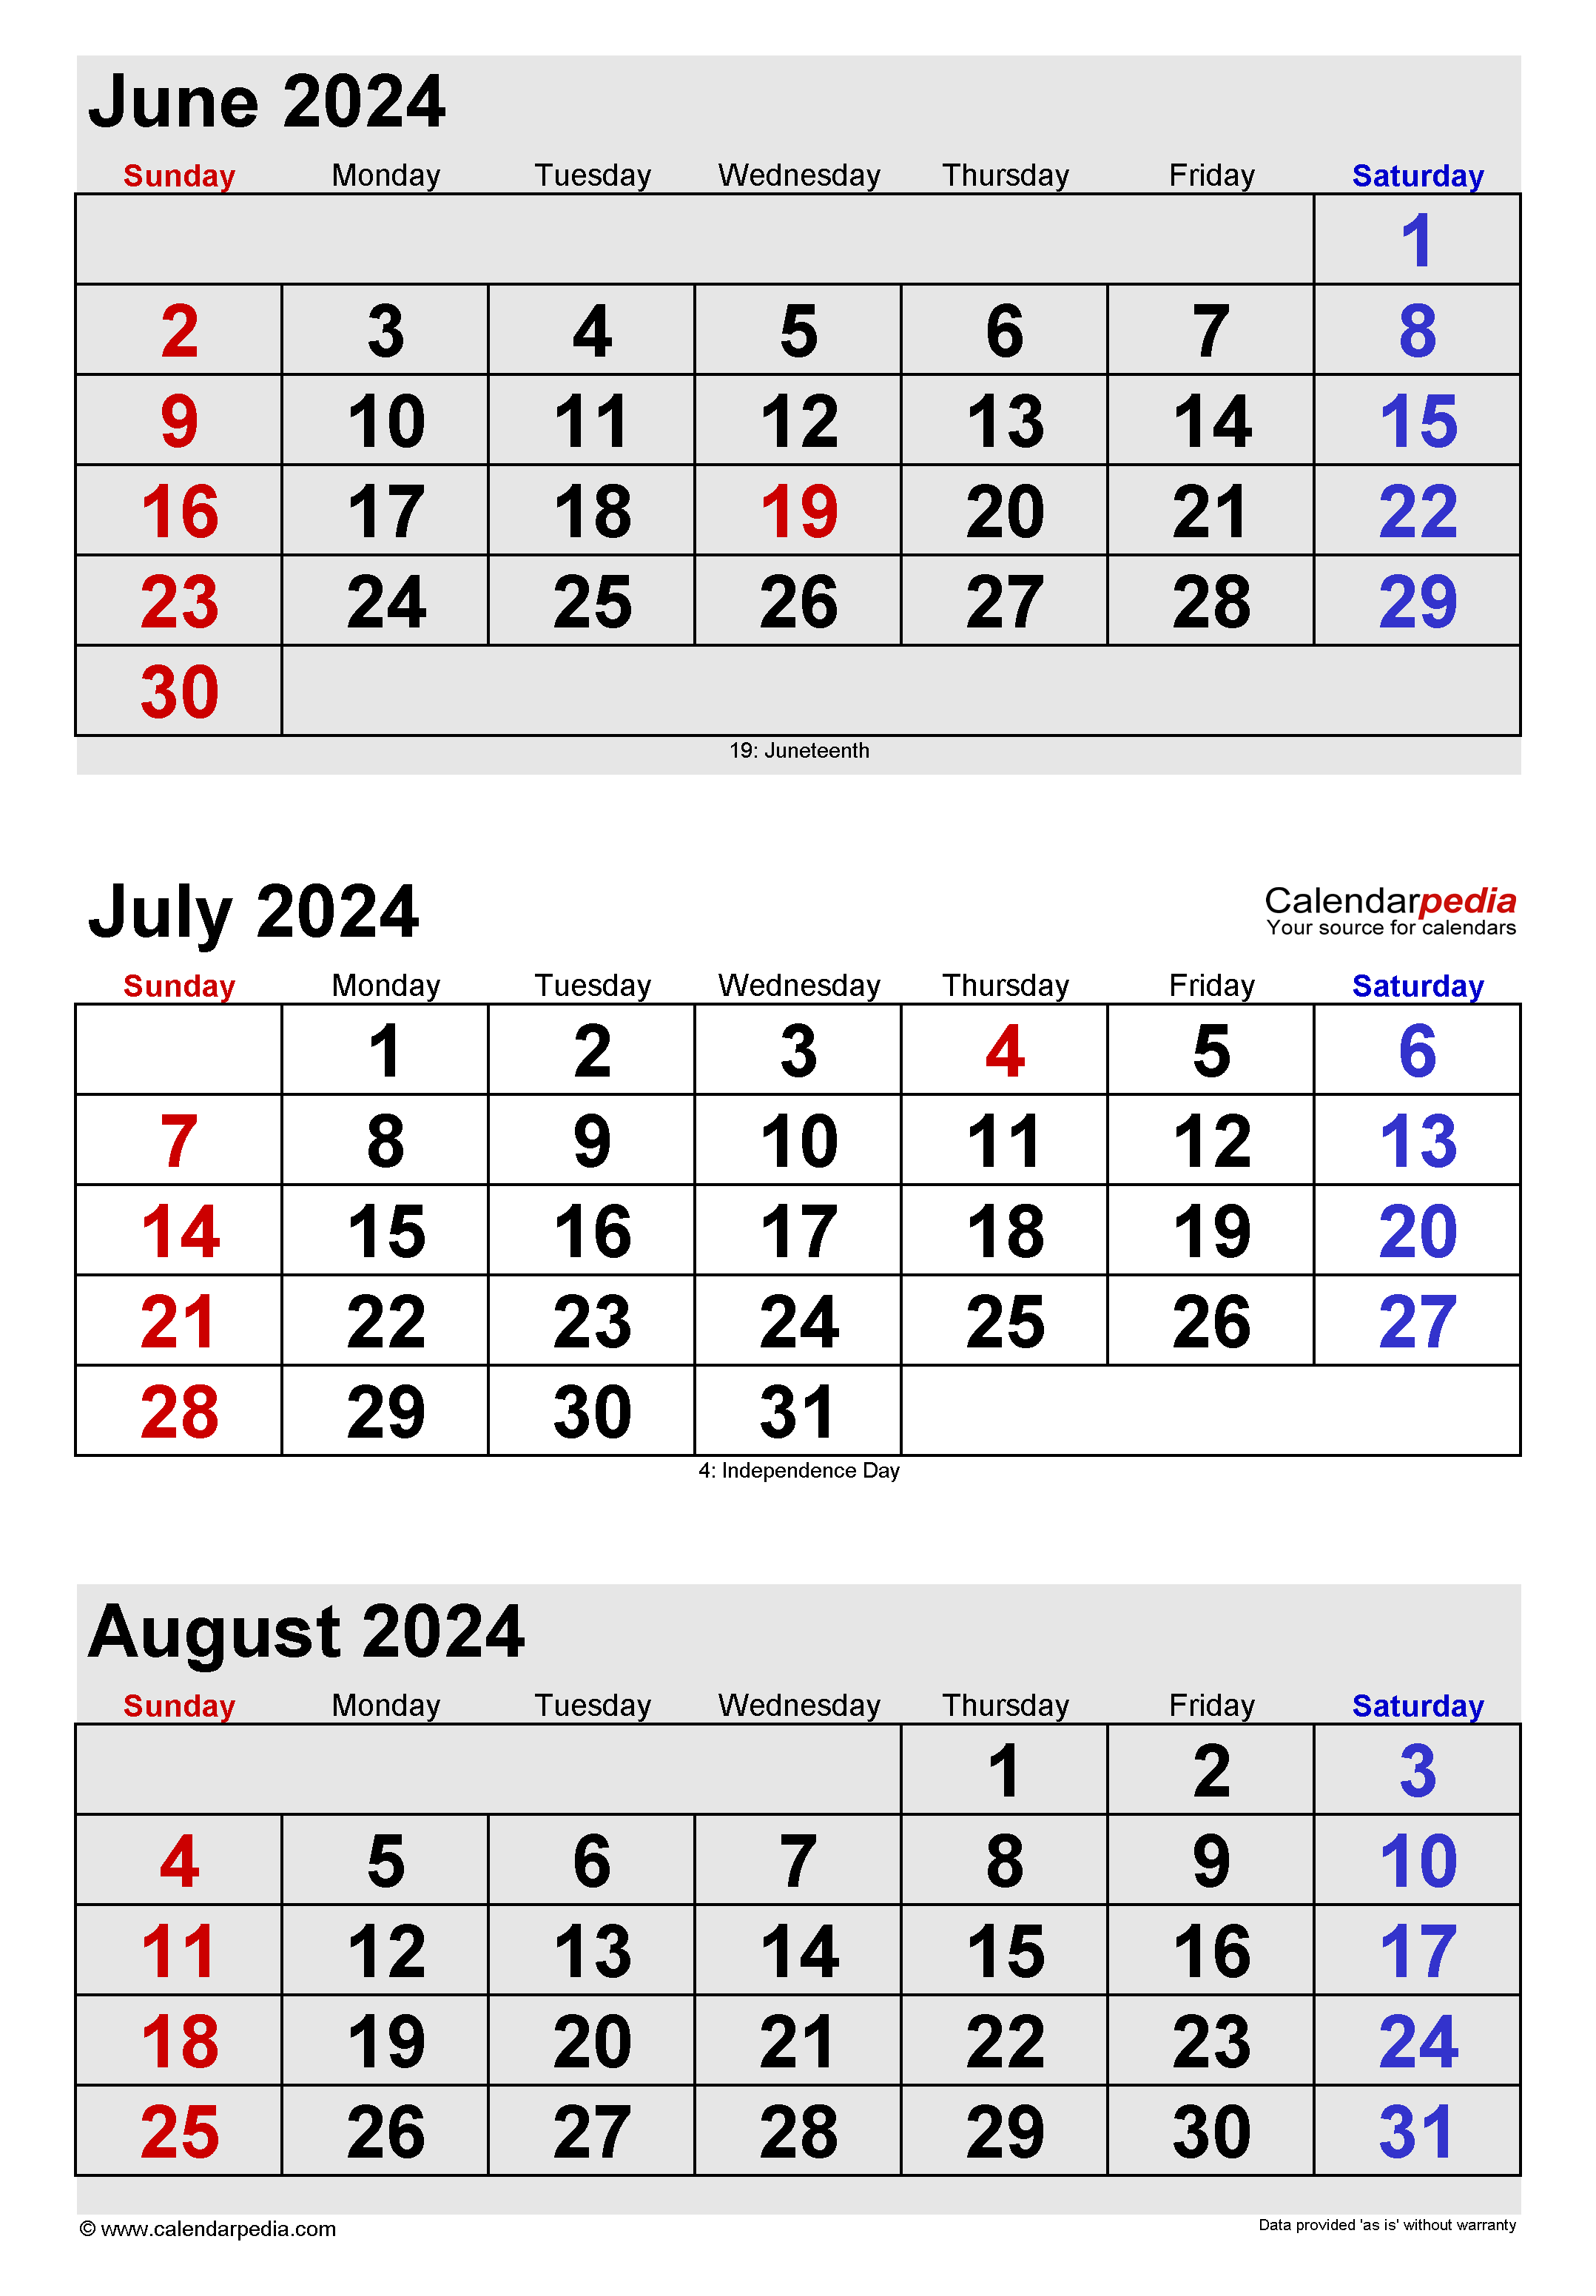 August 2024 July 2024 Calendar Printable 2024 CALENDAR PRINTABLE - Free Printable 6 Month Calendar 2024 July